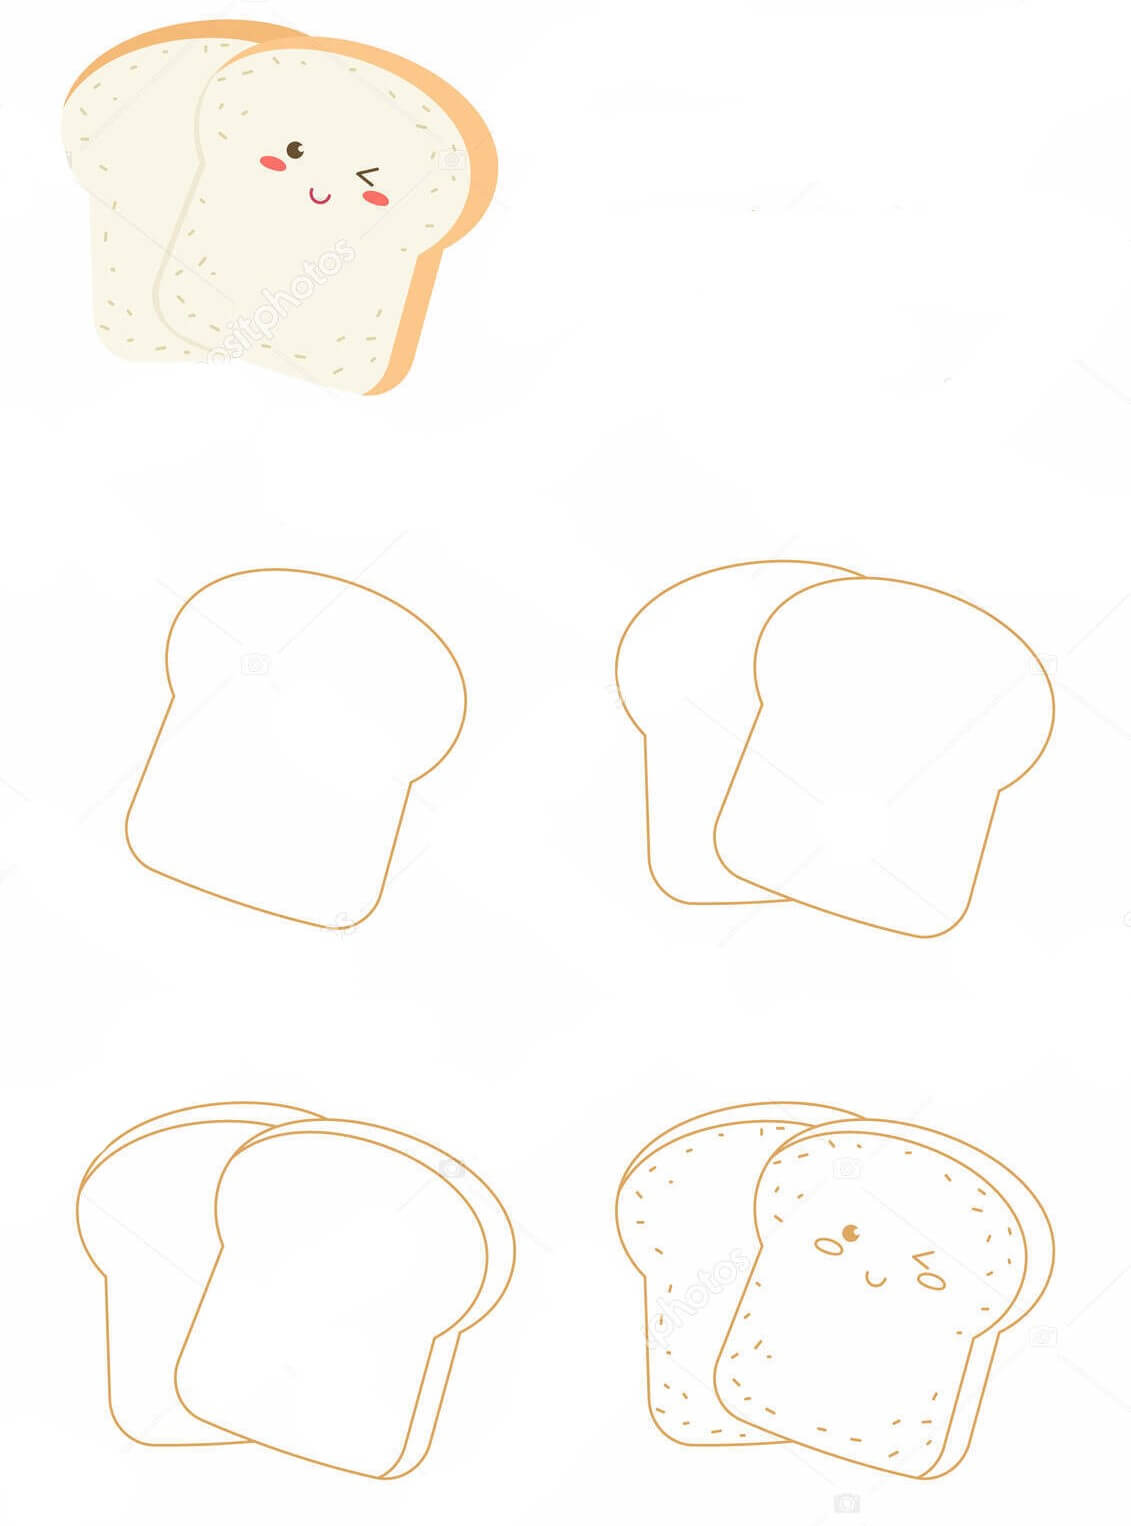 Bread idea (7) Drawing Ideas